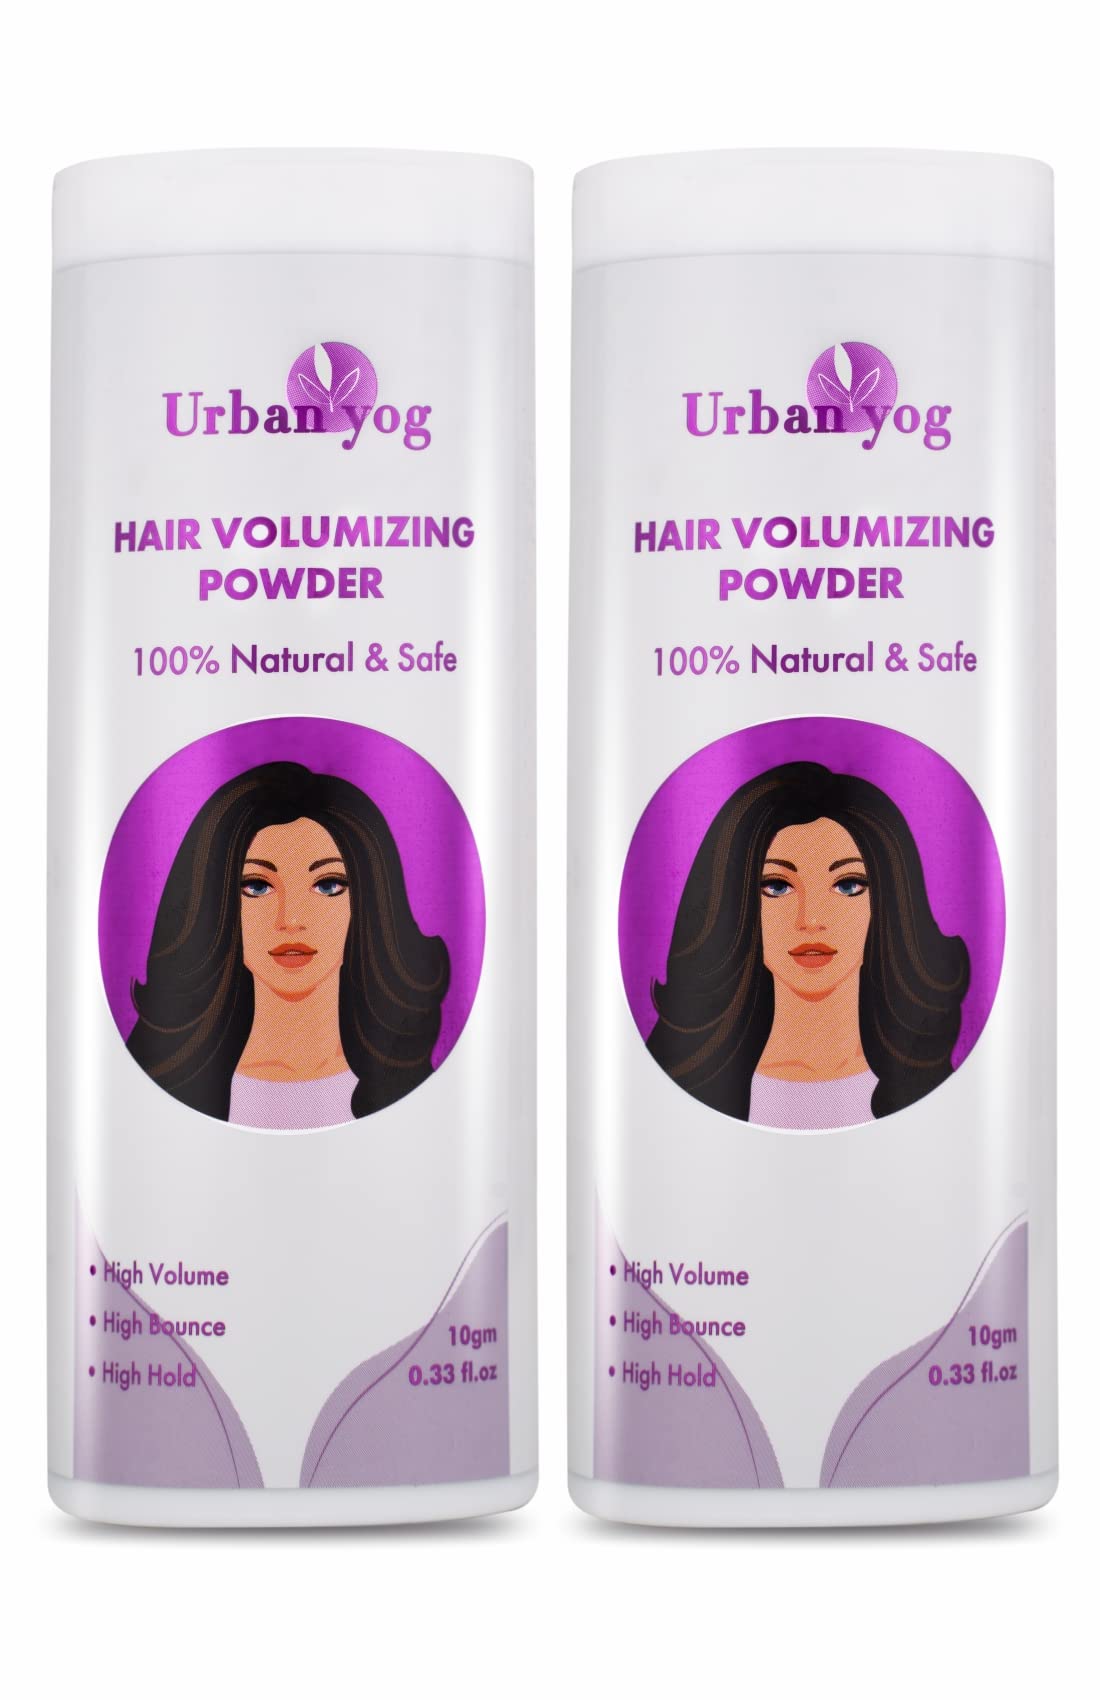 Urban Yog Hair Volumizing Powder for Women (10 Gram * 2 Units) (Pack of 2) | Adds Instant Volume and Locks Hairstyle